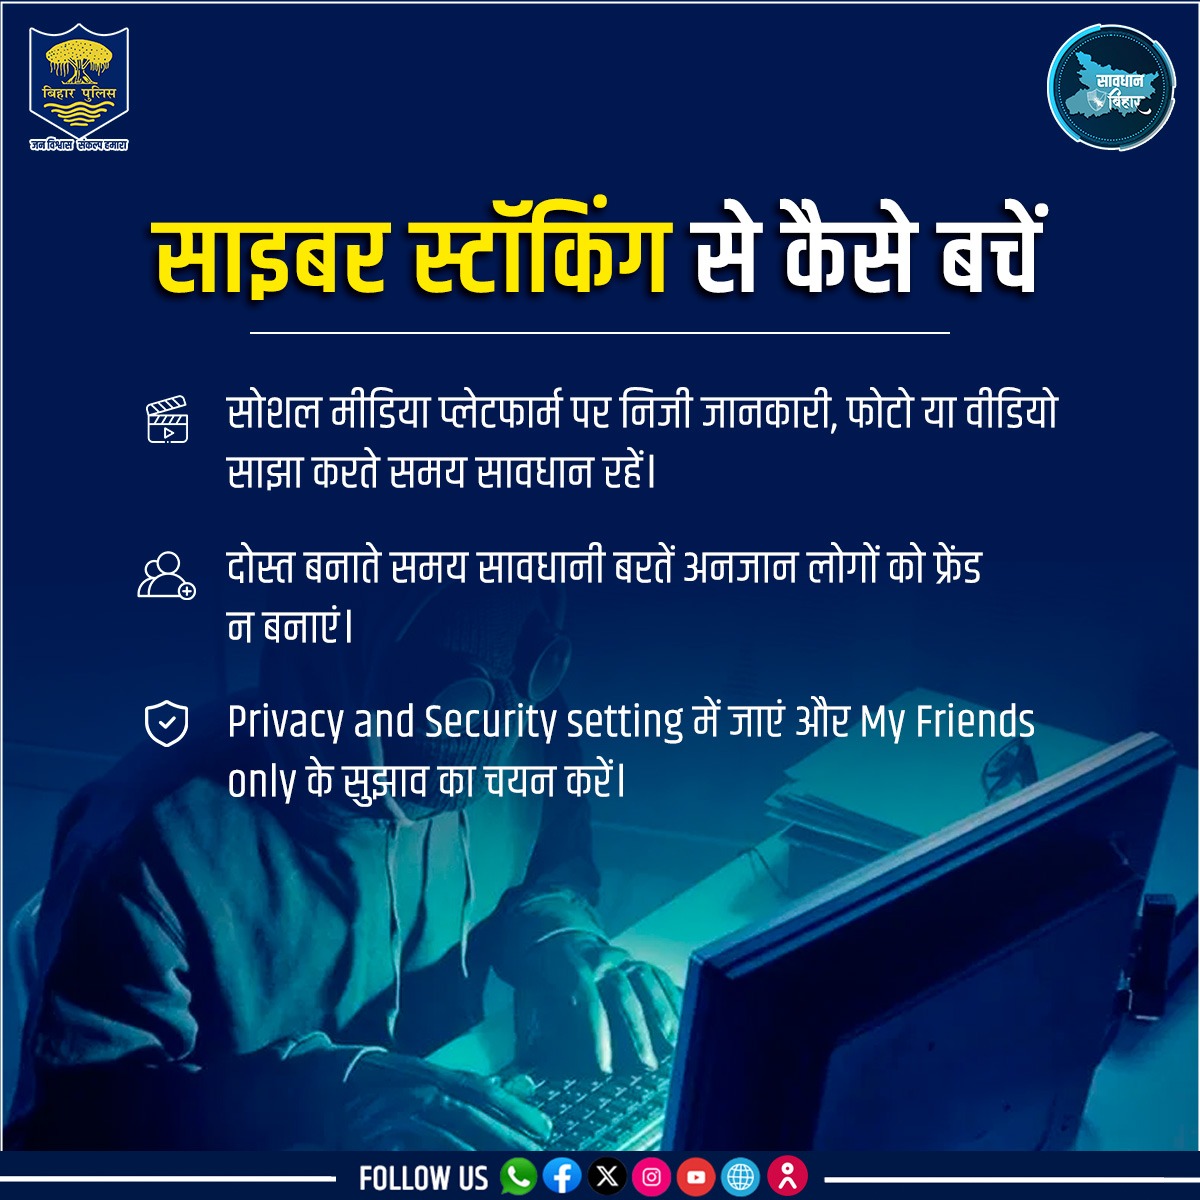 जानें साइबर स्टॉकिंग क्या है और इससे कैसे बचें...
@GAYAPOLICEBIHAR @gaya_dm @ashish_bharti @thiyagarajansm2 @bihar_police @PatnaPolice24x7
#BiharPolice #cybersecurity #cyberawareness #Bihar